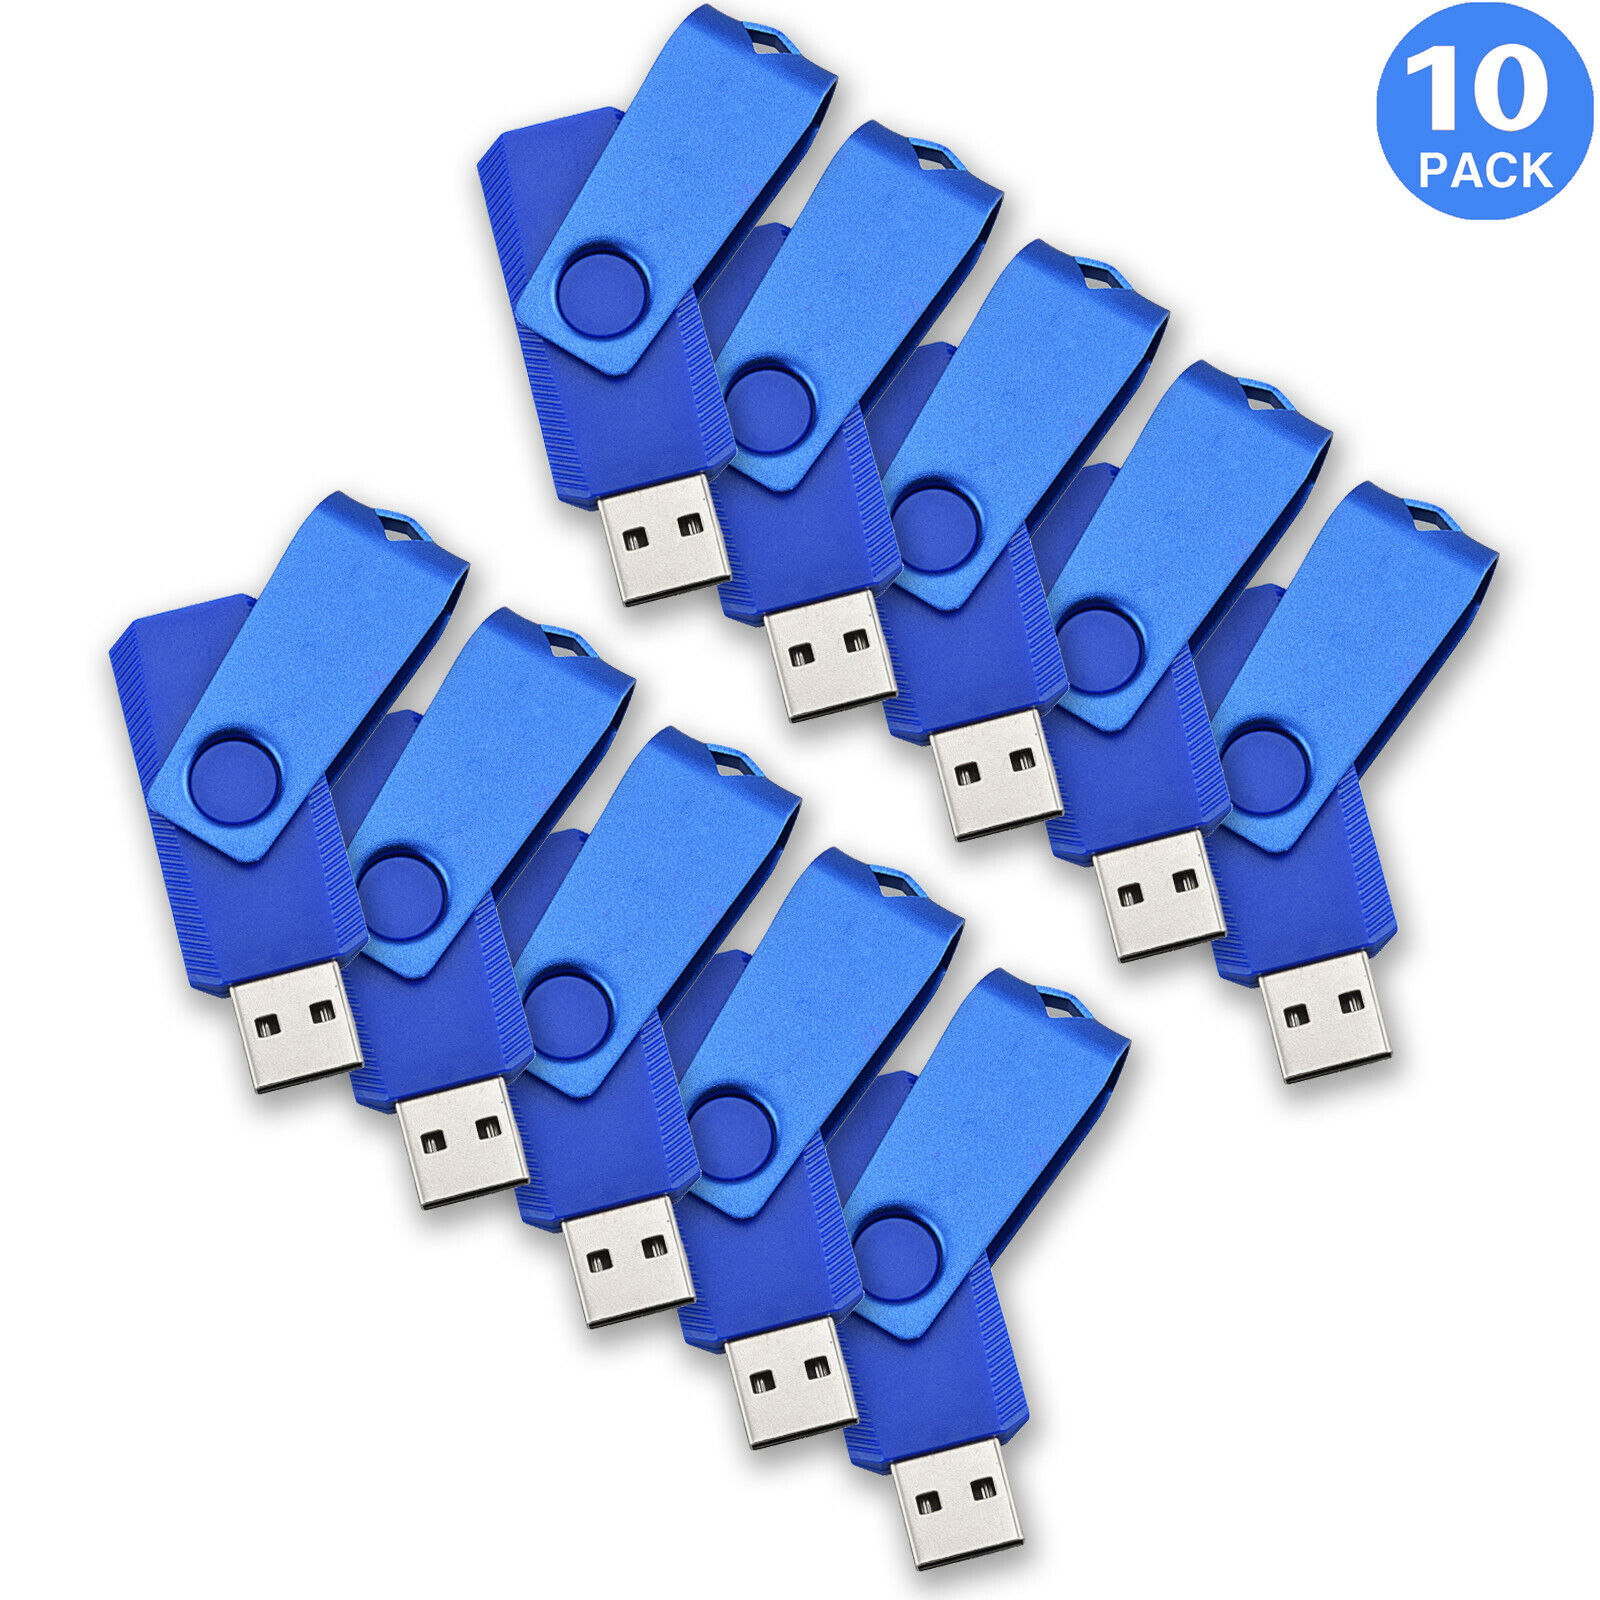 Kootion 10 Pack 8GB Metal Non-Slip USB Flash Drive Memory Stick Thumb Drive Lot 